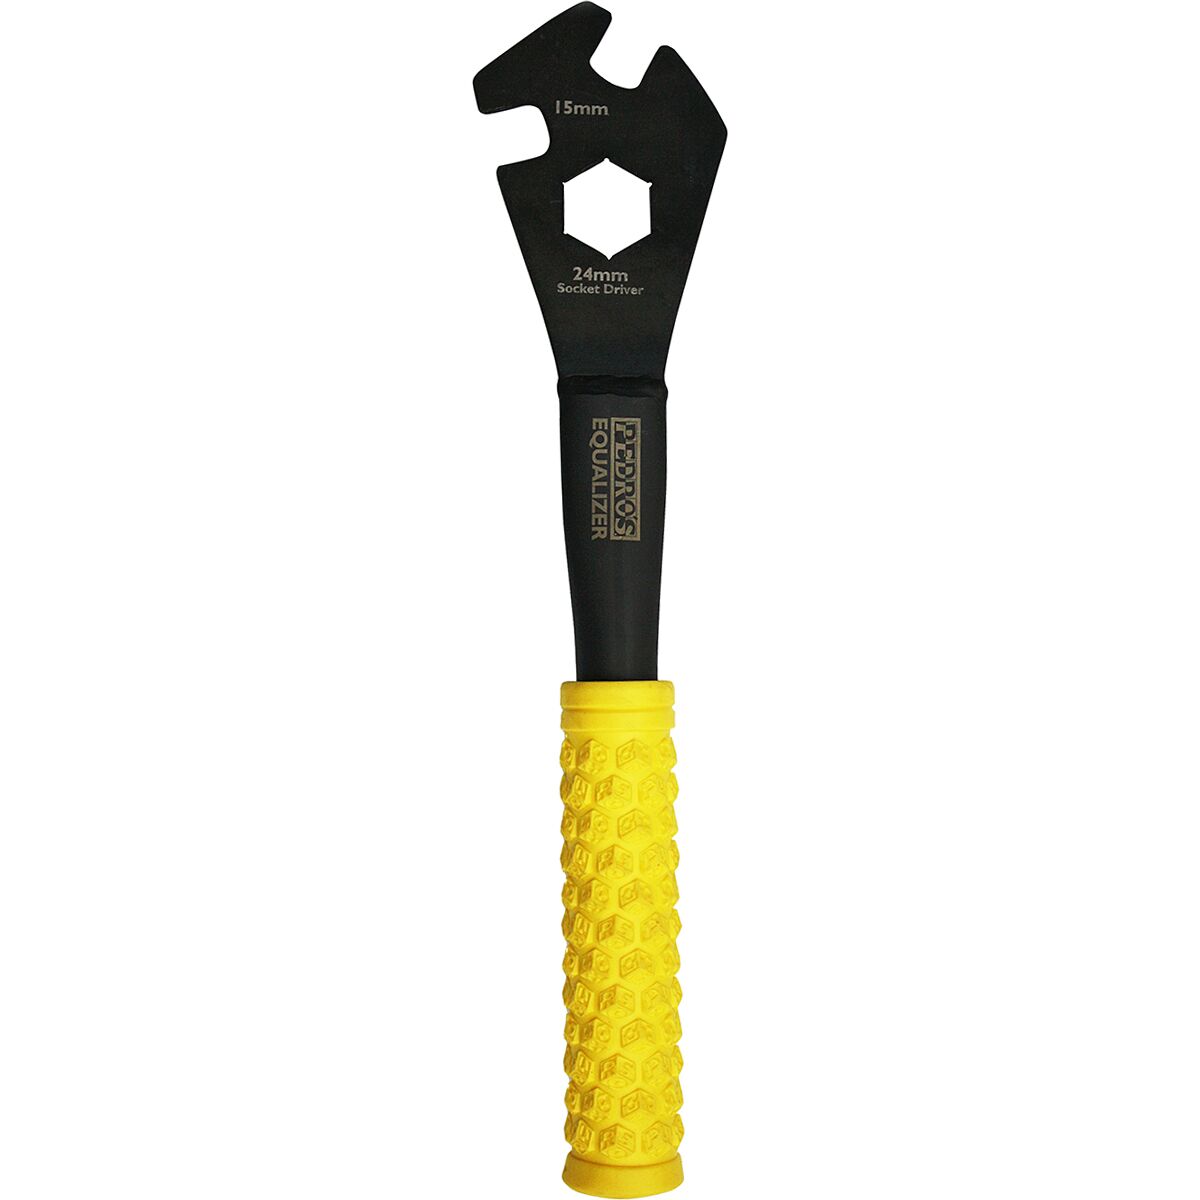 Ключ для педали эквалайзера ii Pedro'S, цвет black/yellow